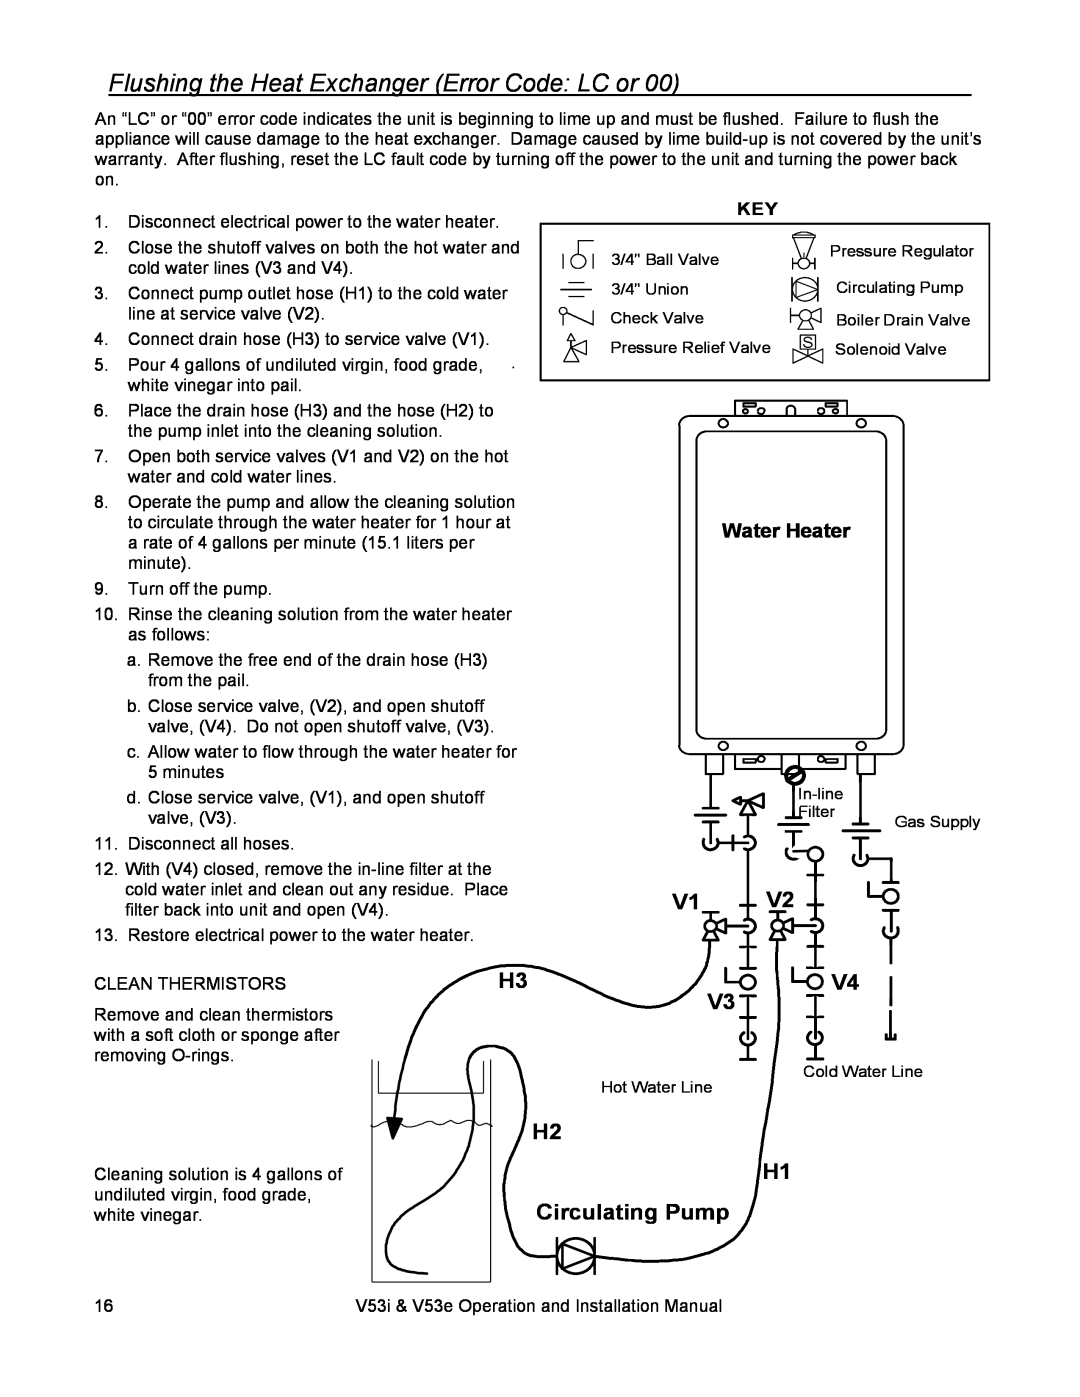 Rinnai V53E, V53I installation manual Flushing the Heat Exchanger Error Code: LC or, H2 H1 Circulating Pump, Water Heater 